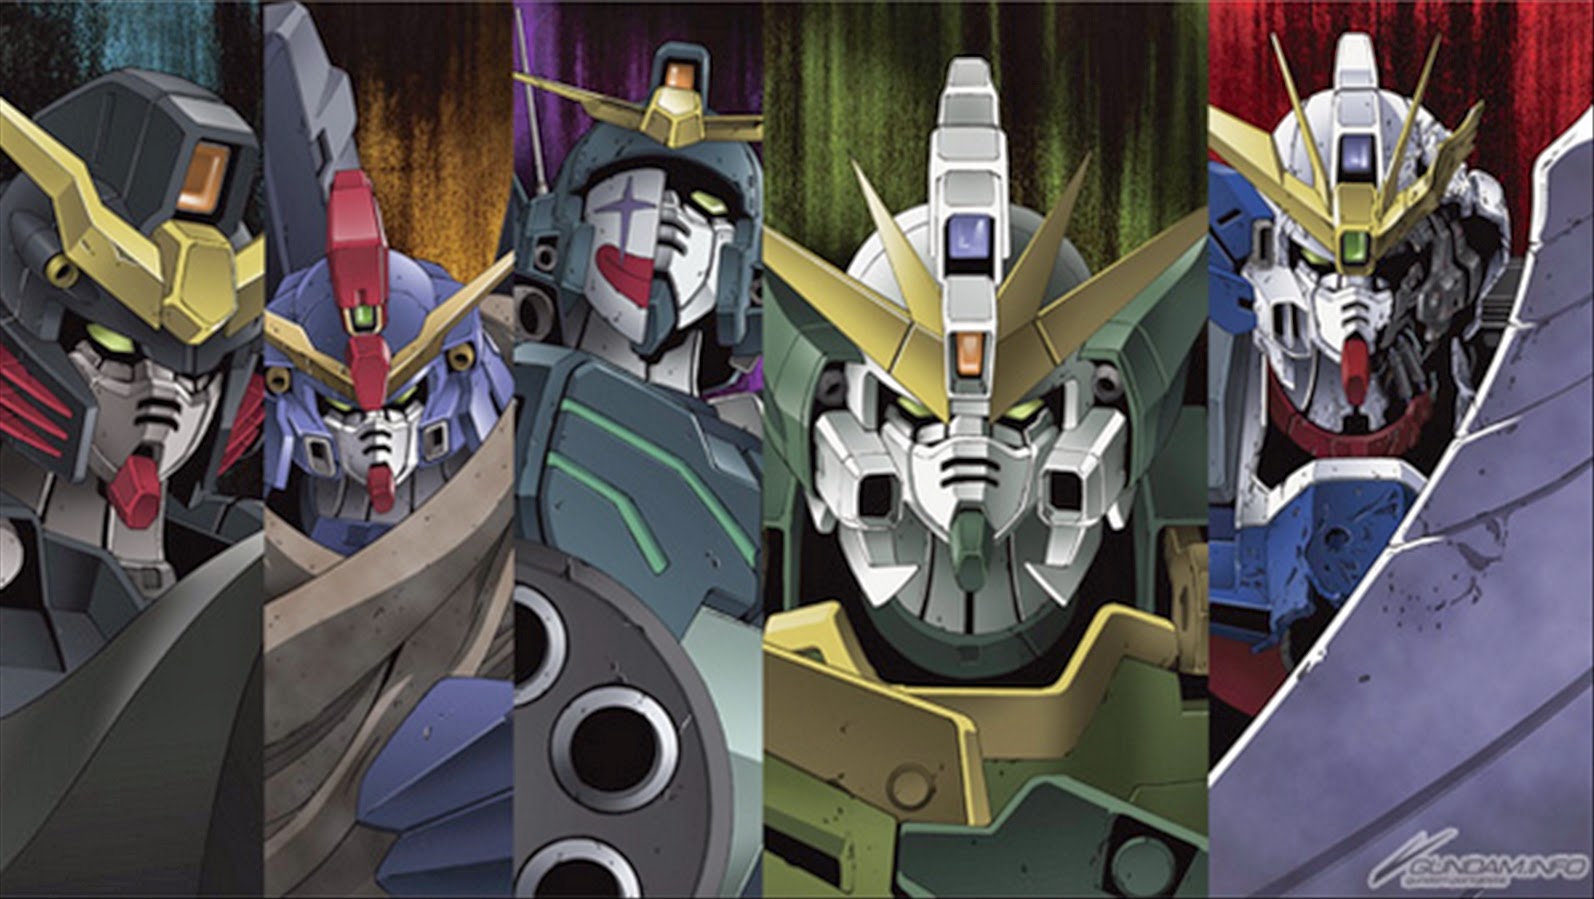 Mobile Suit Gundam W Endless Waltz Blu-ray Box - Release Info